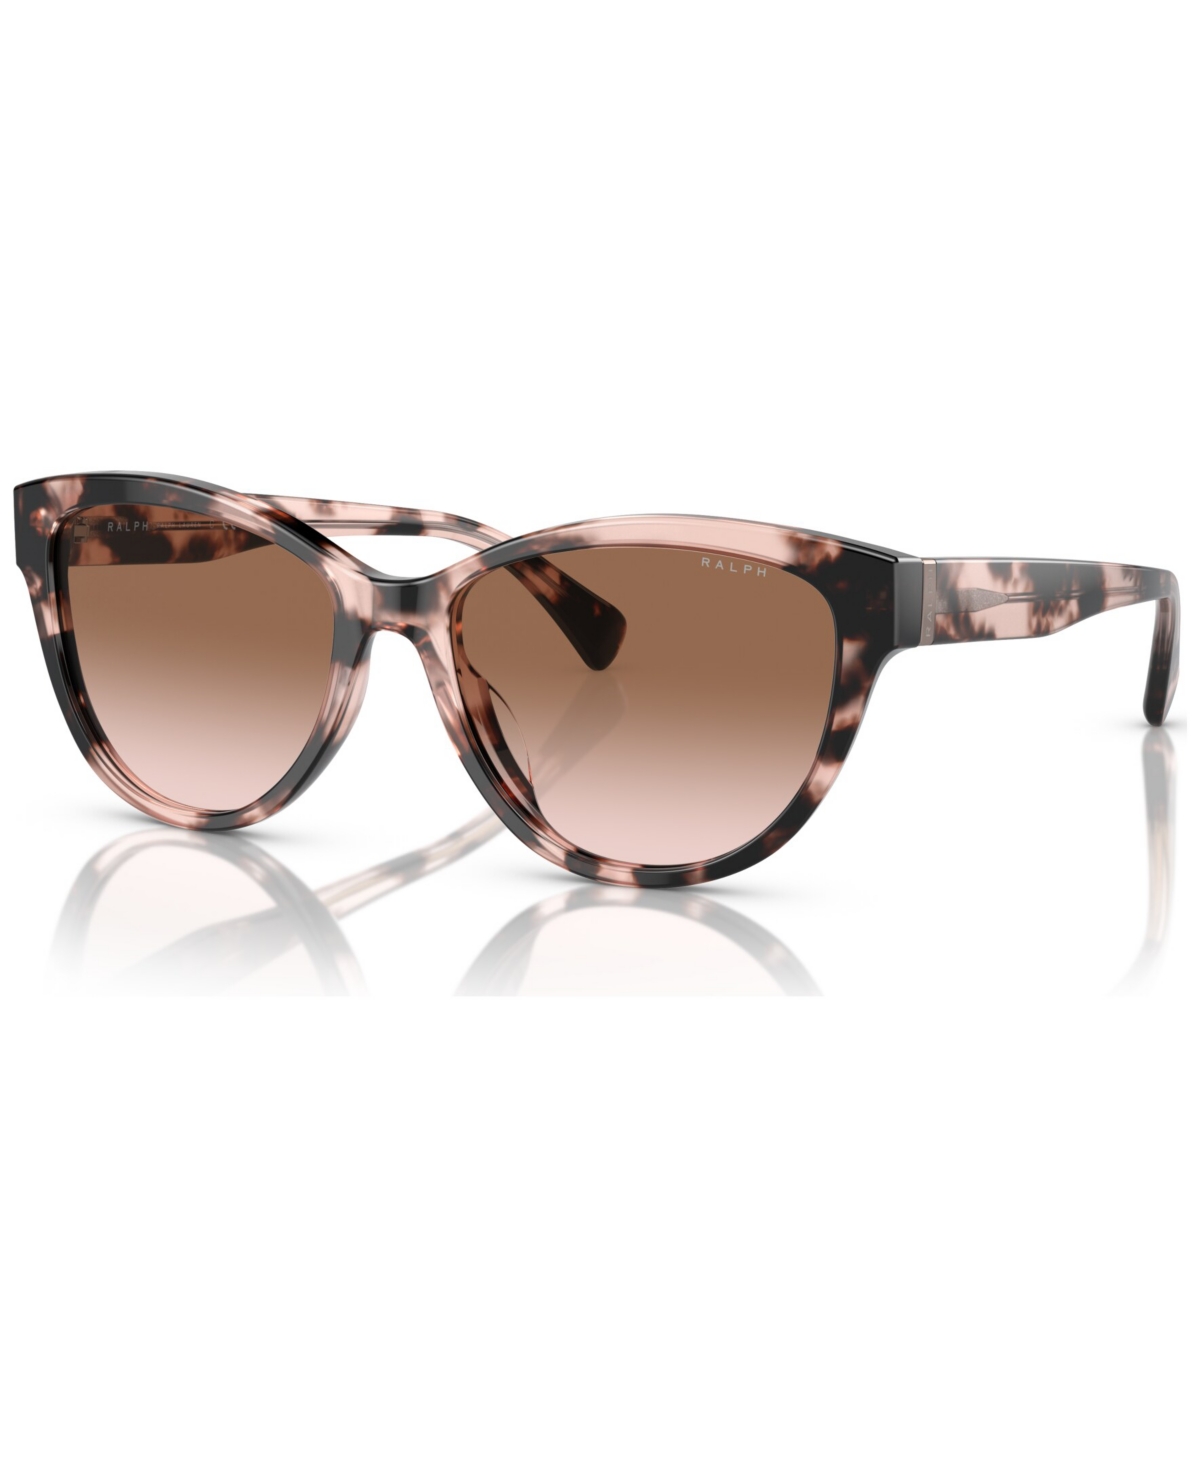 Women's Sunglasses, RA5299U - Shiny Pink Havana